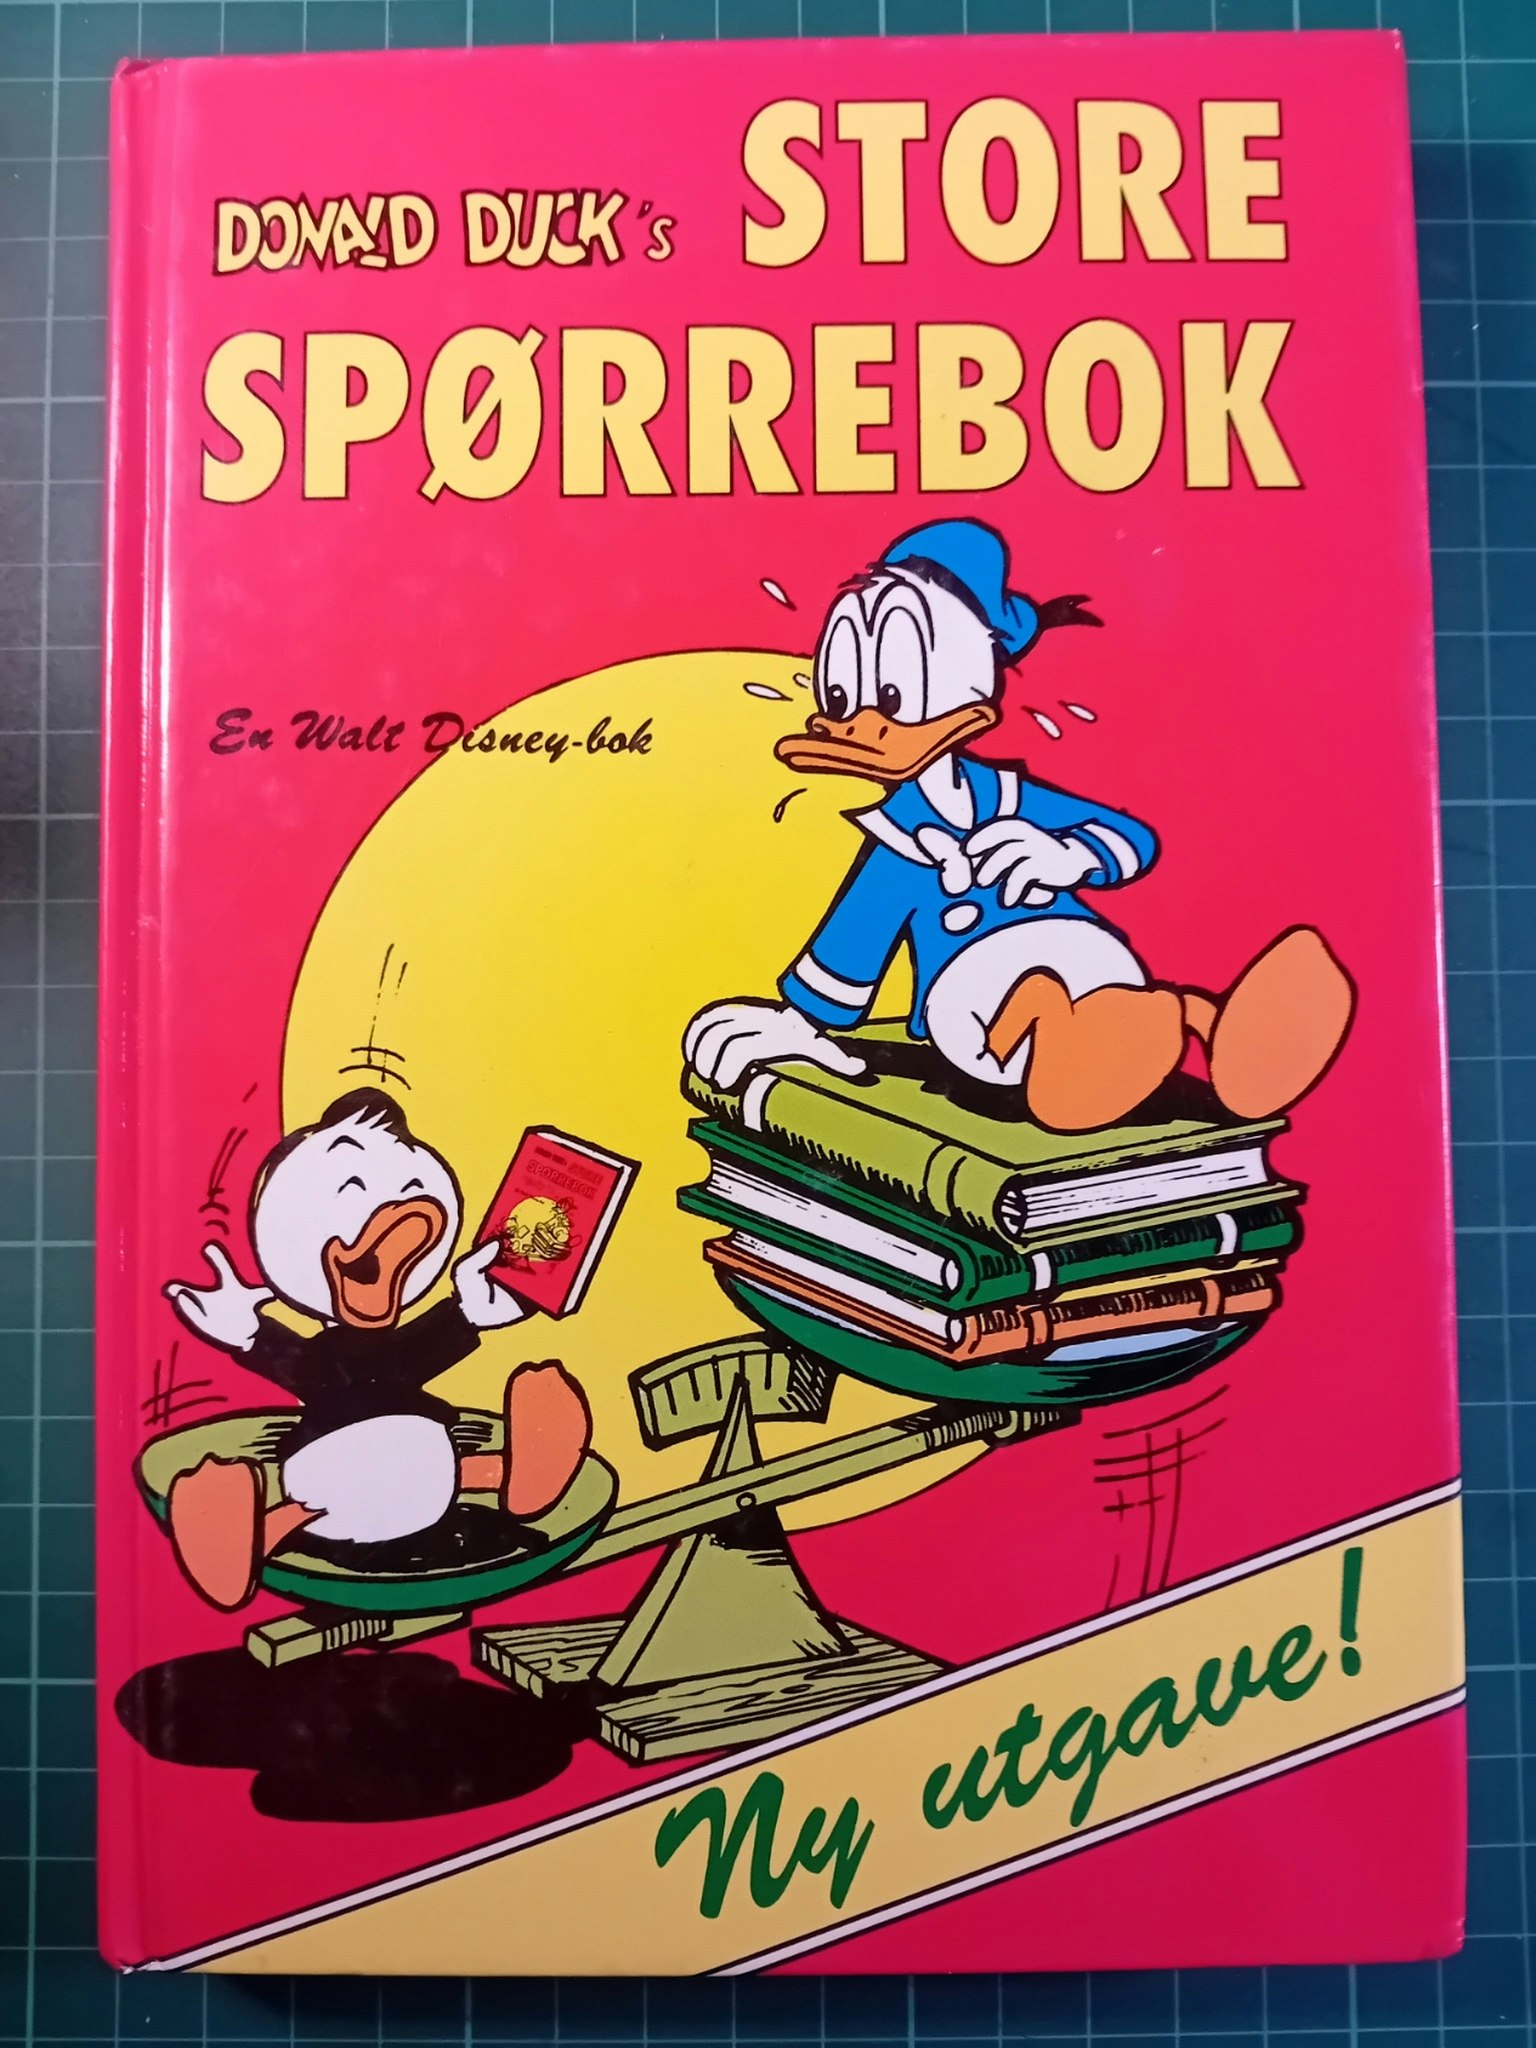 Donald Duck store spørrebok 1990